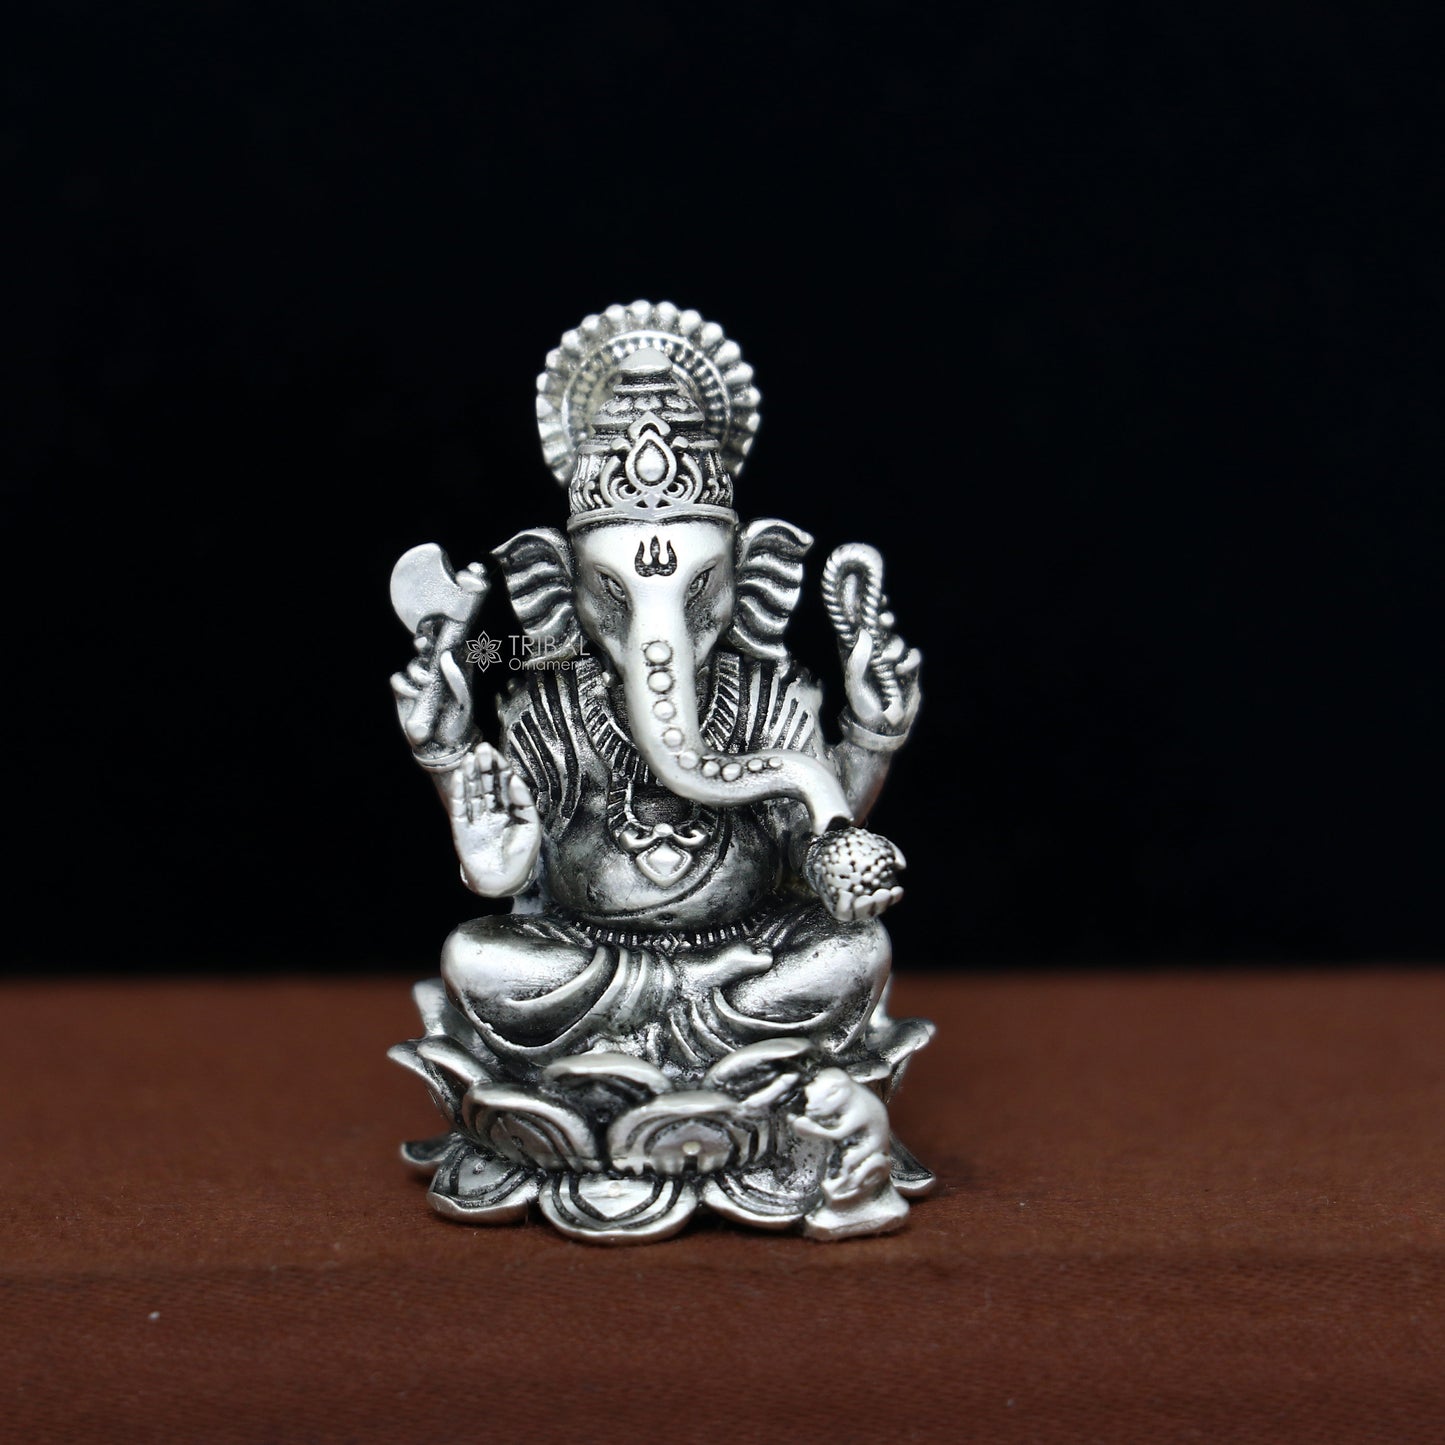 1.5" 925 Sterling silver lord Ganesha Kamlasan statue puja article figurine, Diwali puja Divine silver article of prosperity& wealth art717 - TRIBAL ORNAMENTS